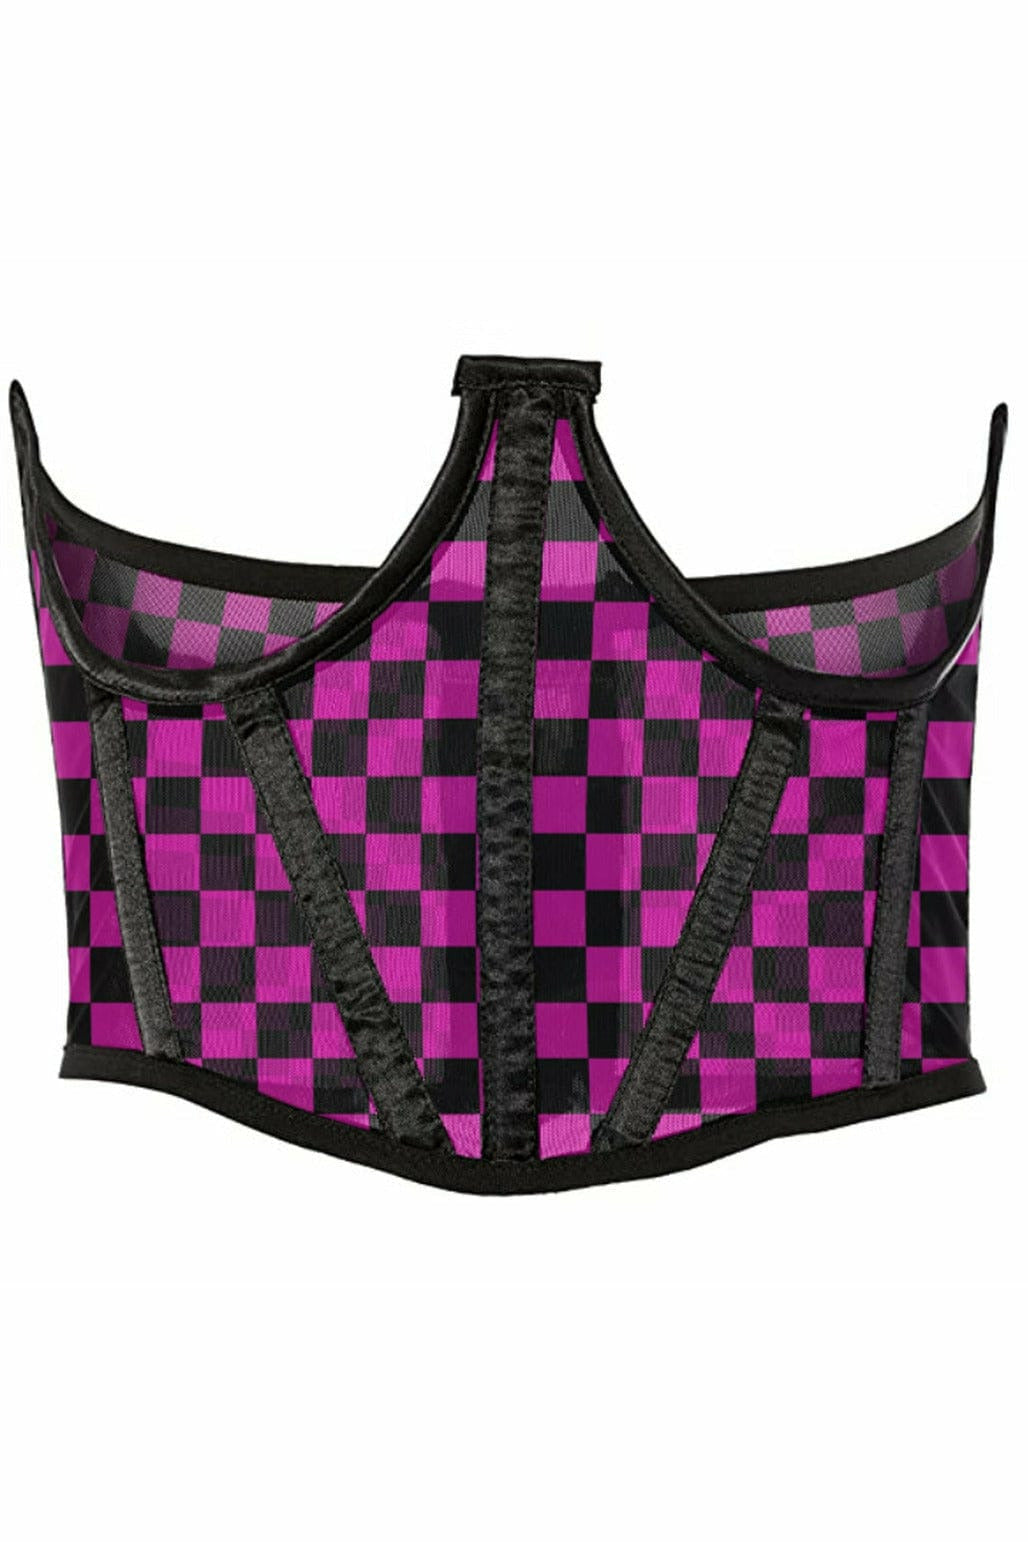 Lavish Neon Pink/Black Checker Print Mesh Open Cup Waist Cincher-Daisy Corsets